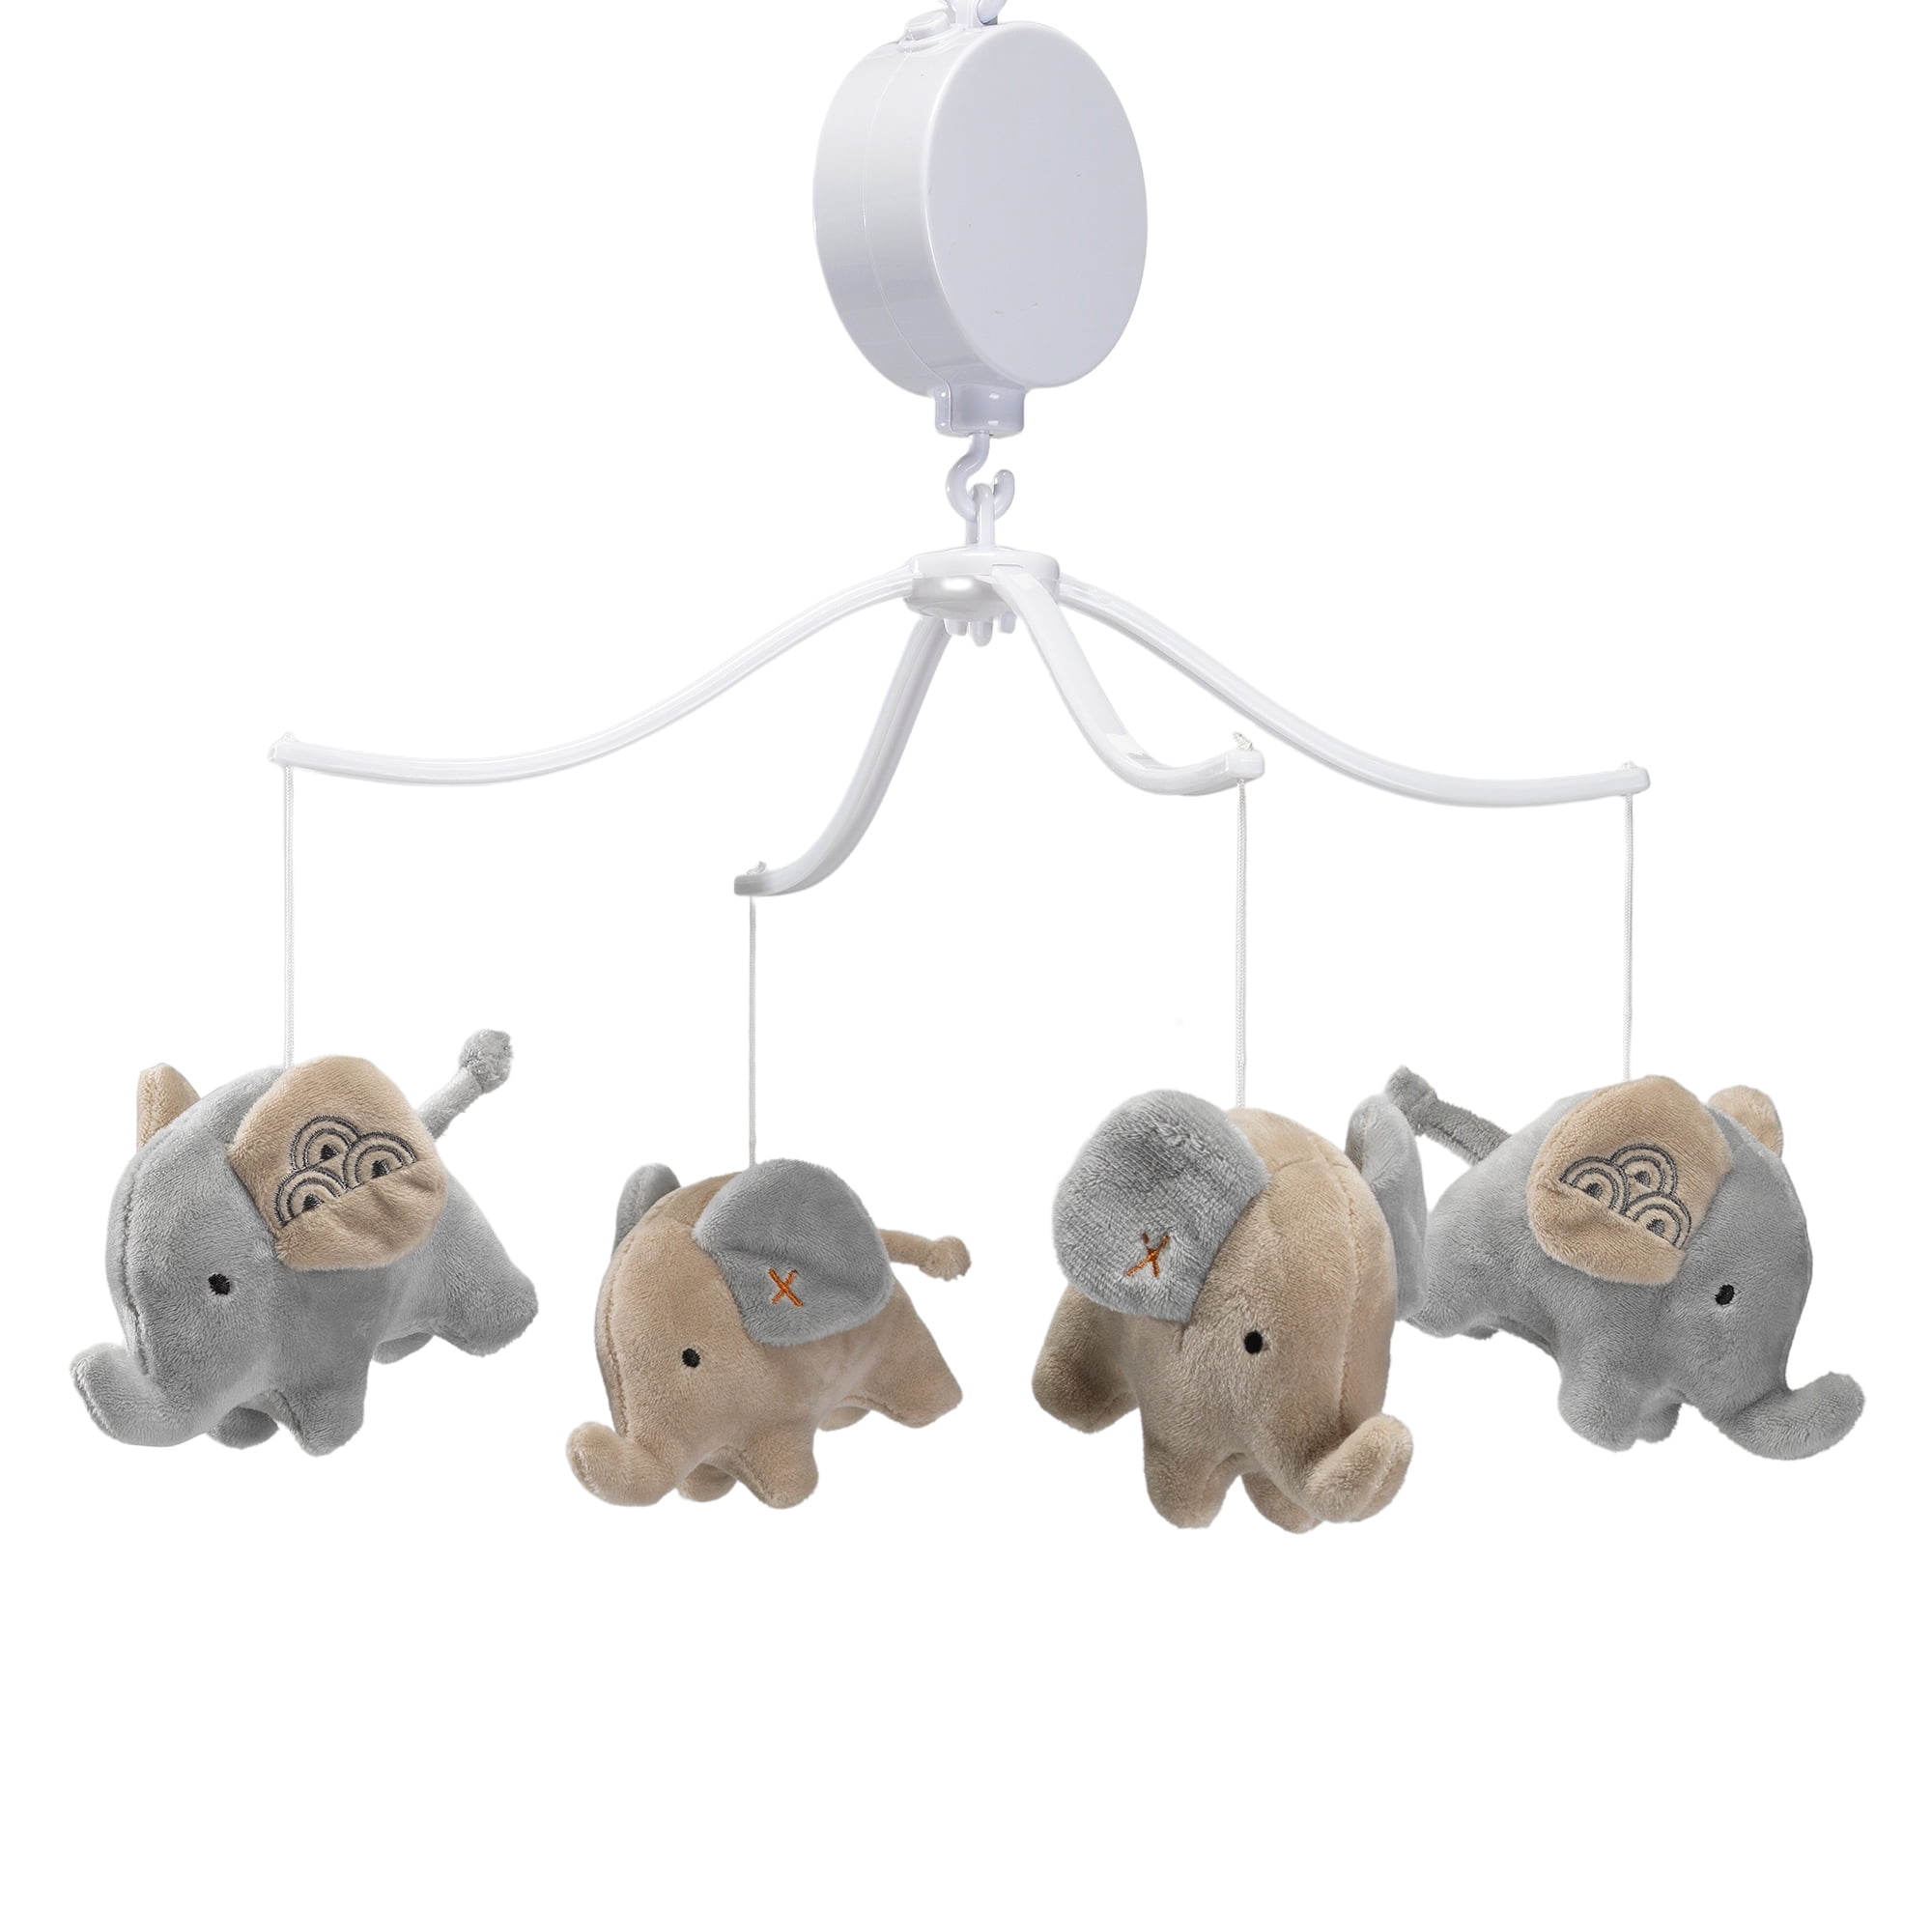 Baby Crib Musical Mobile Chevron Canopy Grey Hanging Stuffed Elephant Decor Toy 